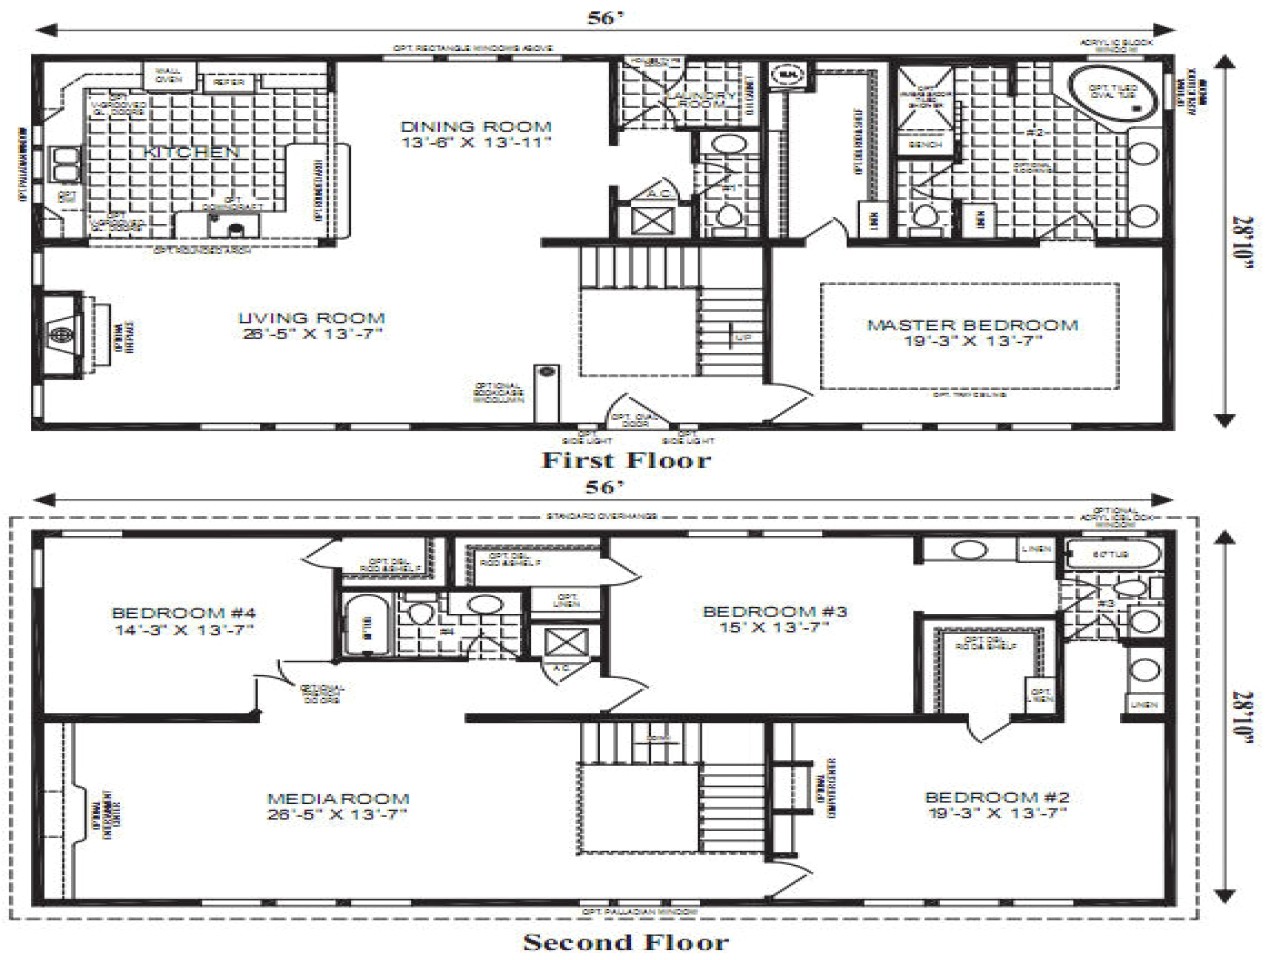 1912ee9d0dc159a1 open floor plans small home modular home floor plans